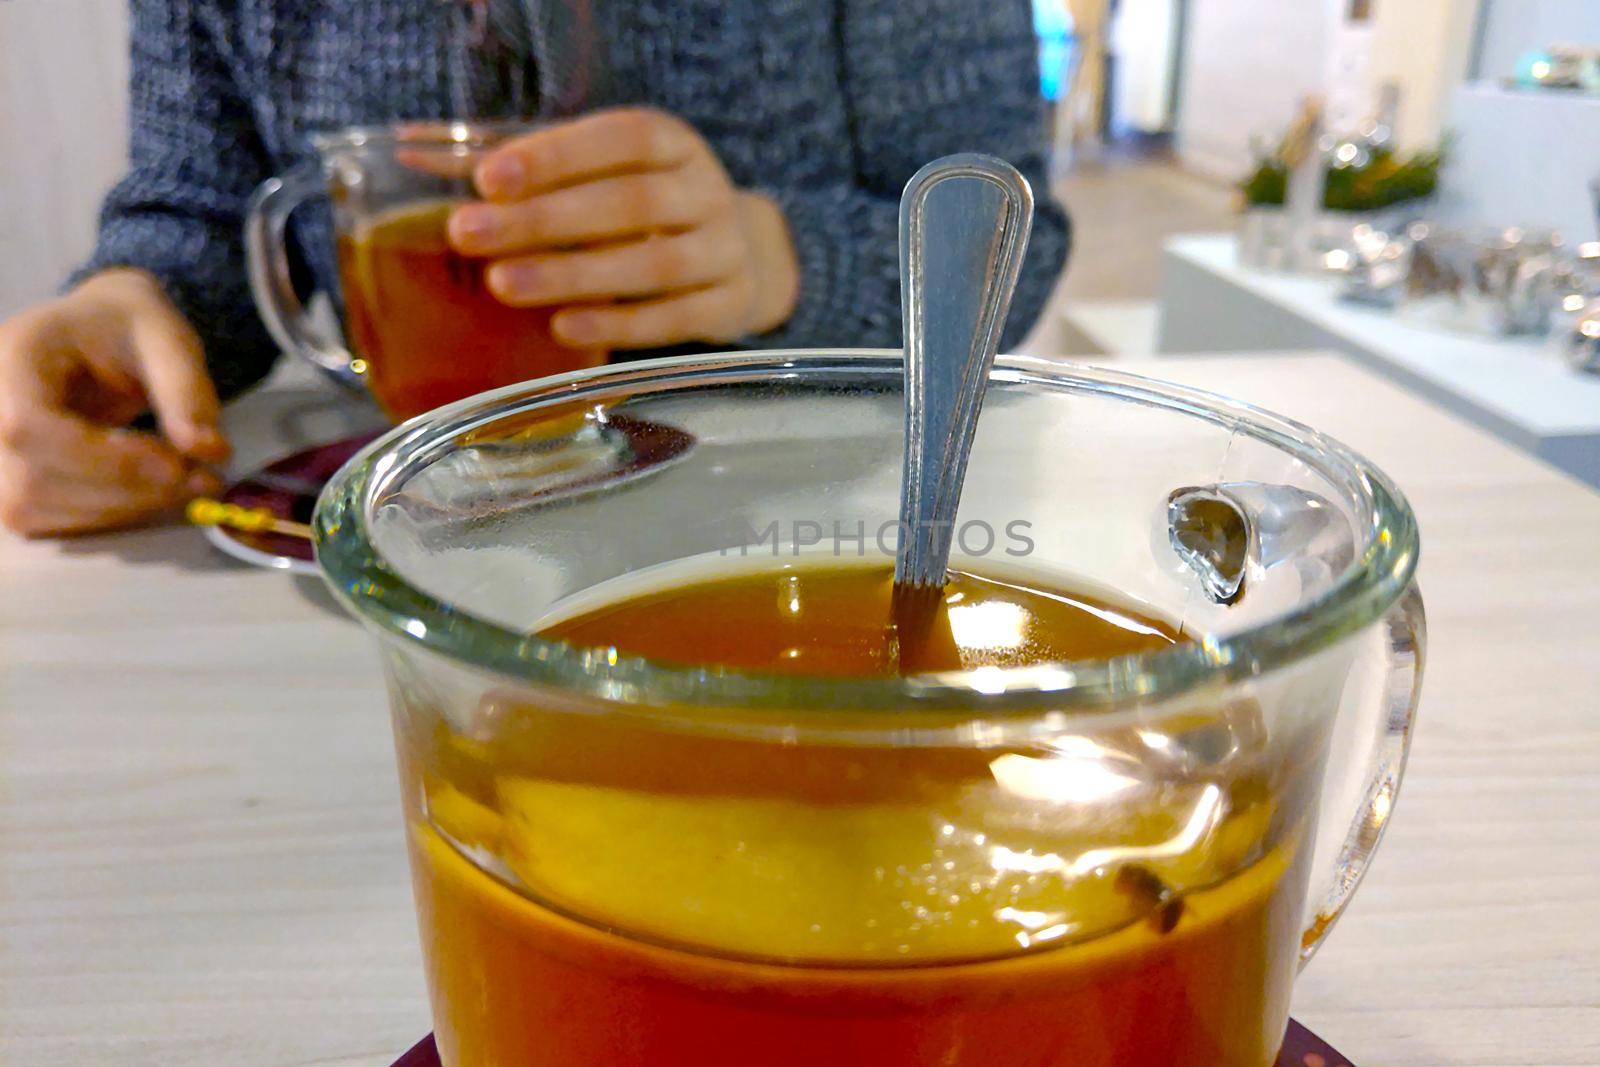 A mug of hot tea with lemon in a cafe